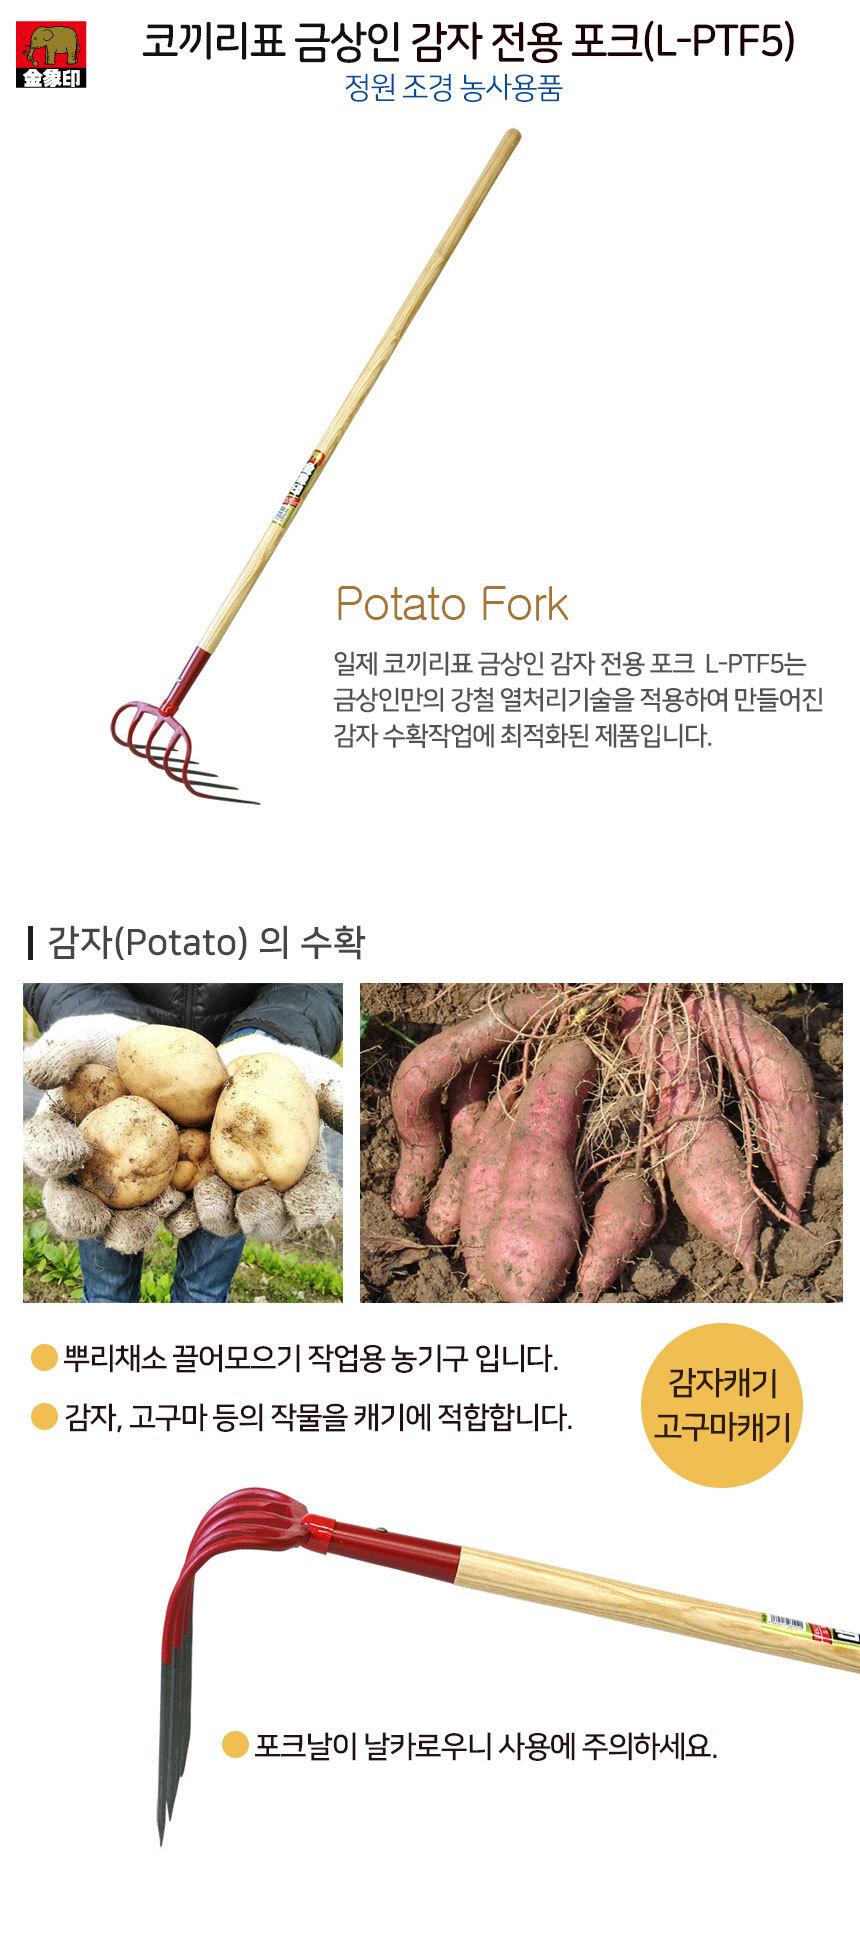 PotatoForkL-PTF5_detail1.jpg